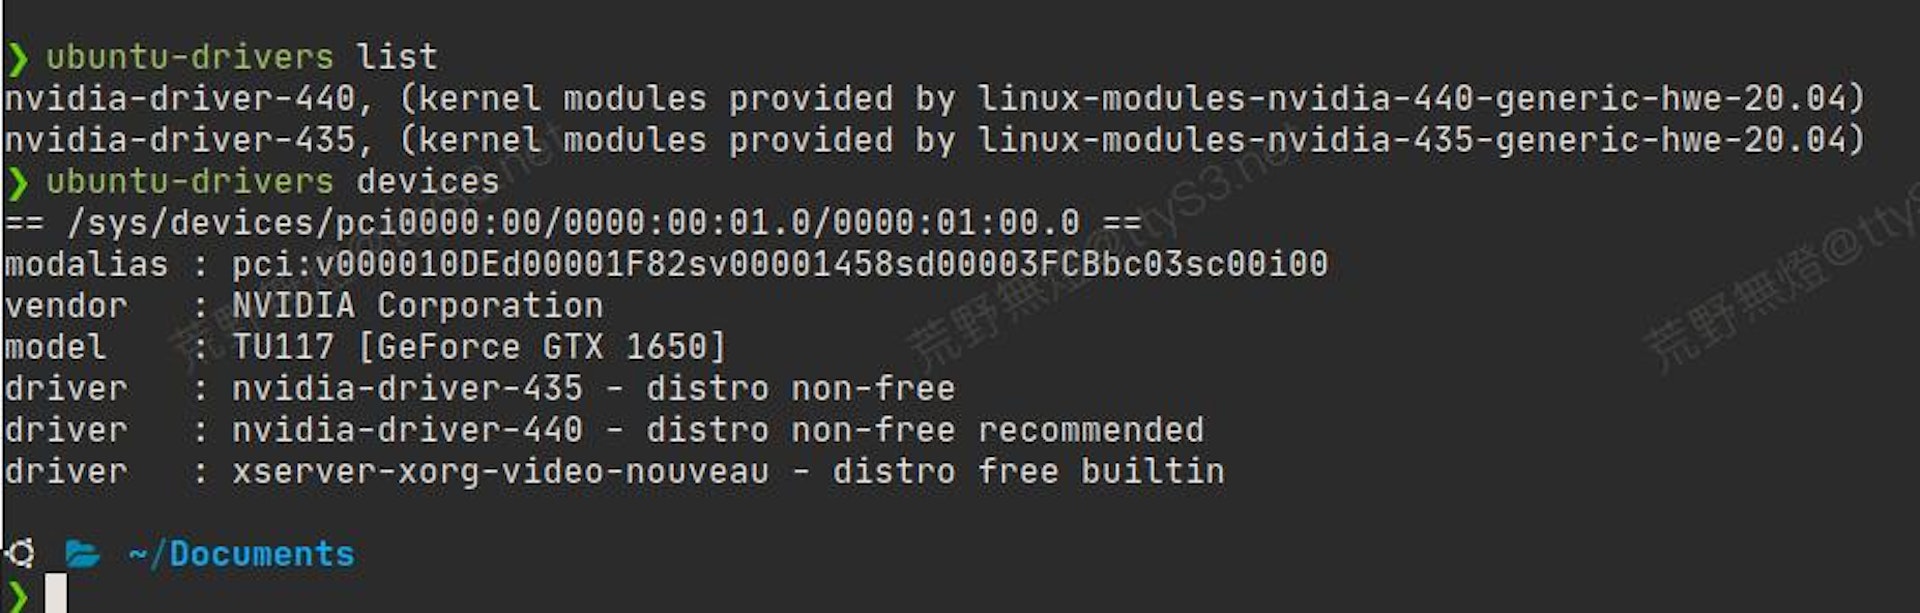 ubuntu-drivers-list.jpg